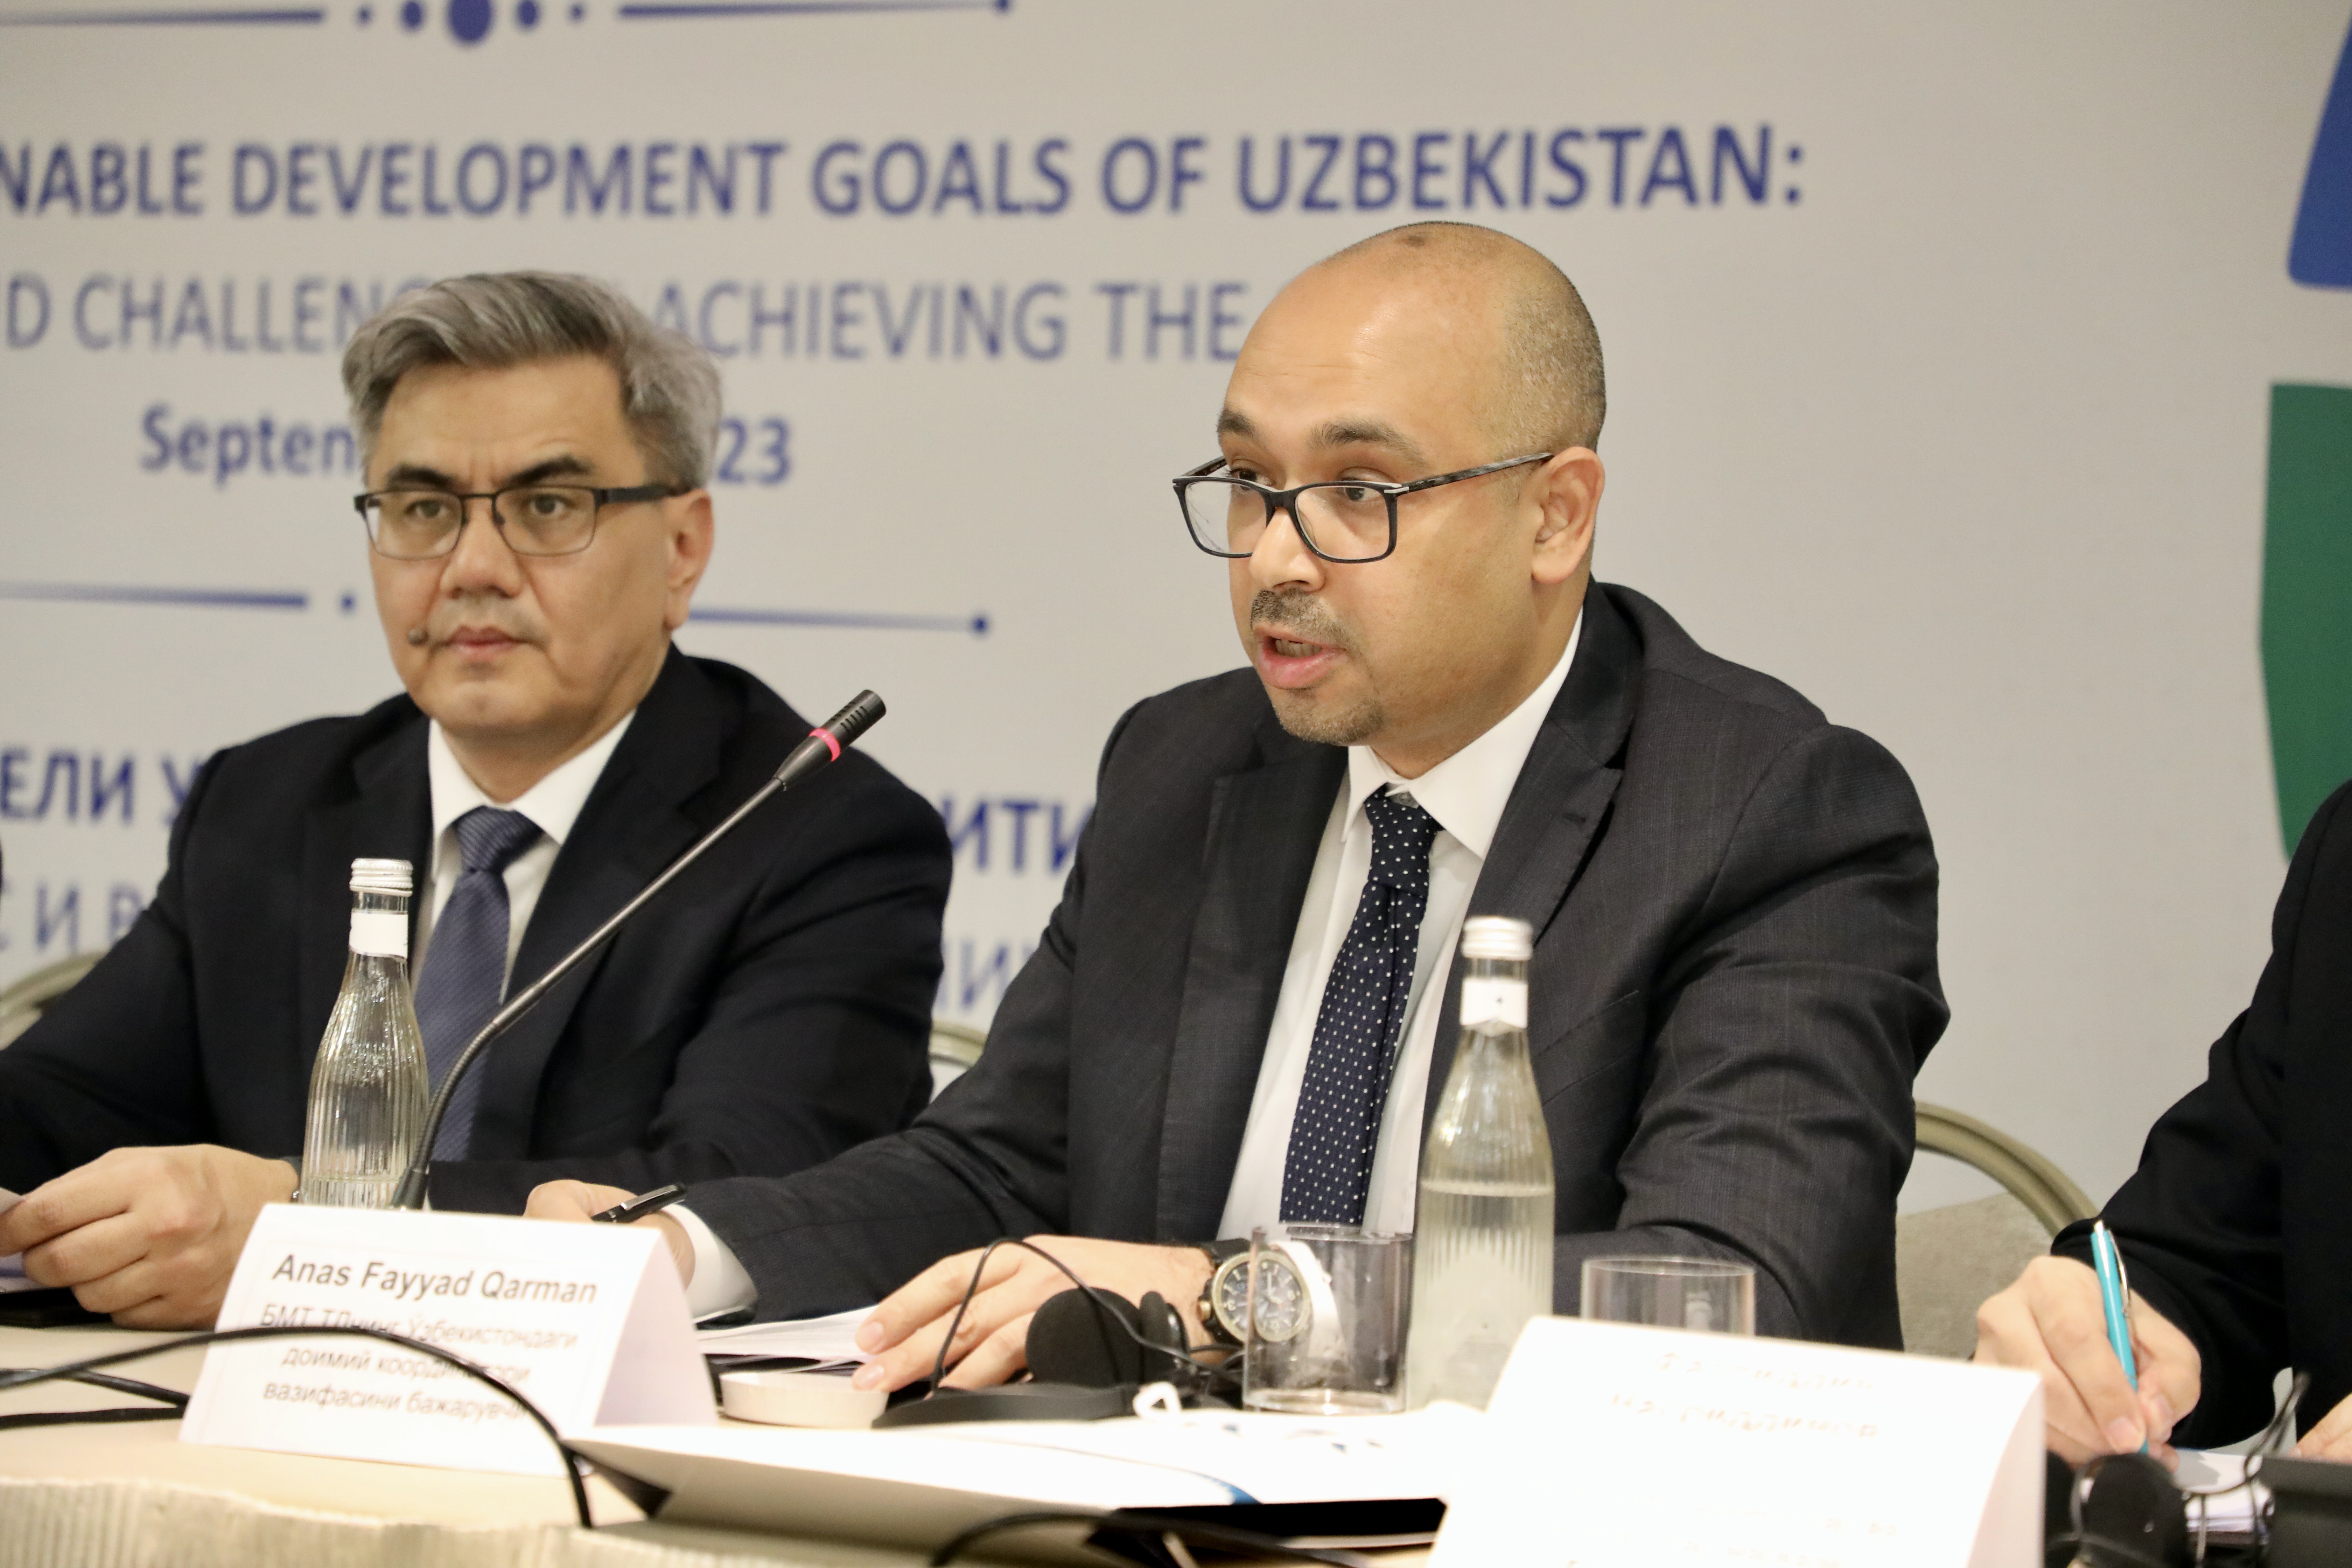 global problems in uzbekistan essay